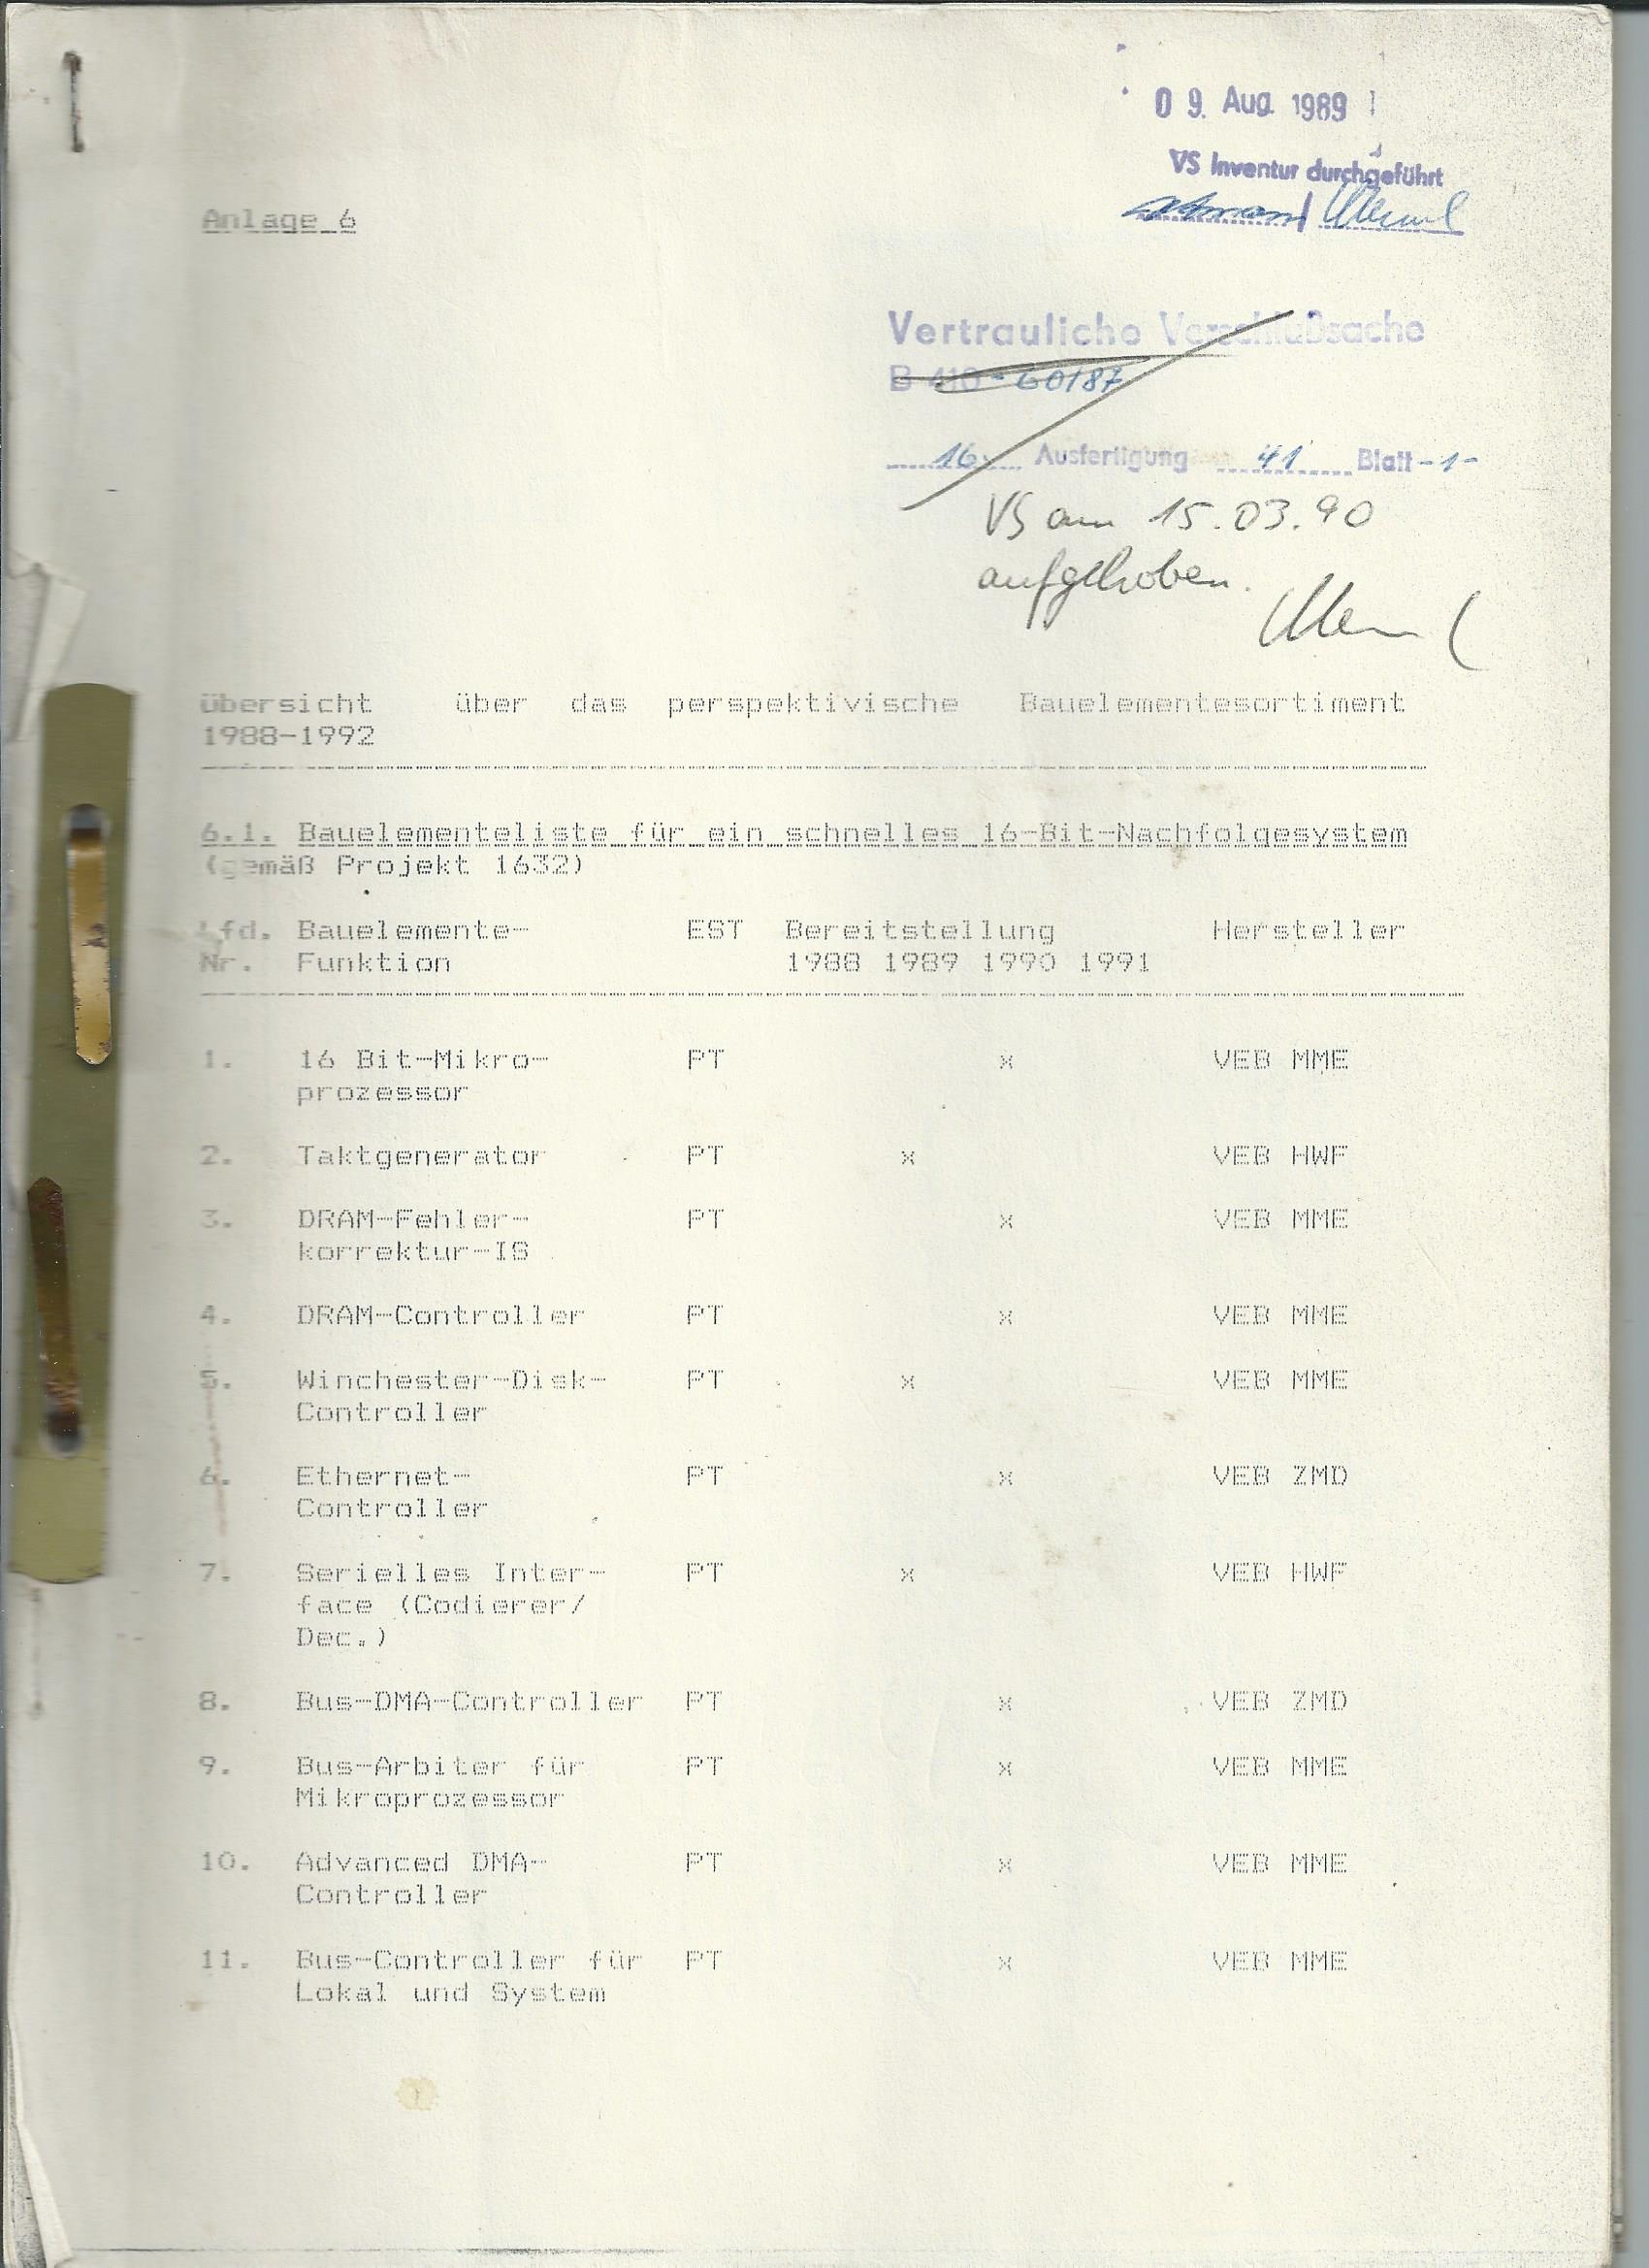 Bauelementesortimentsliste 1987 -  VVS B410/60/87 MP 600 (Industriesalon Schöneweide CC BY-SA)